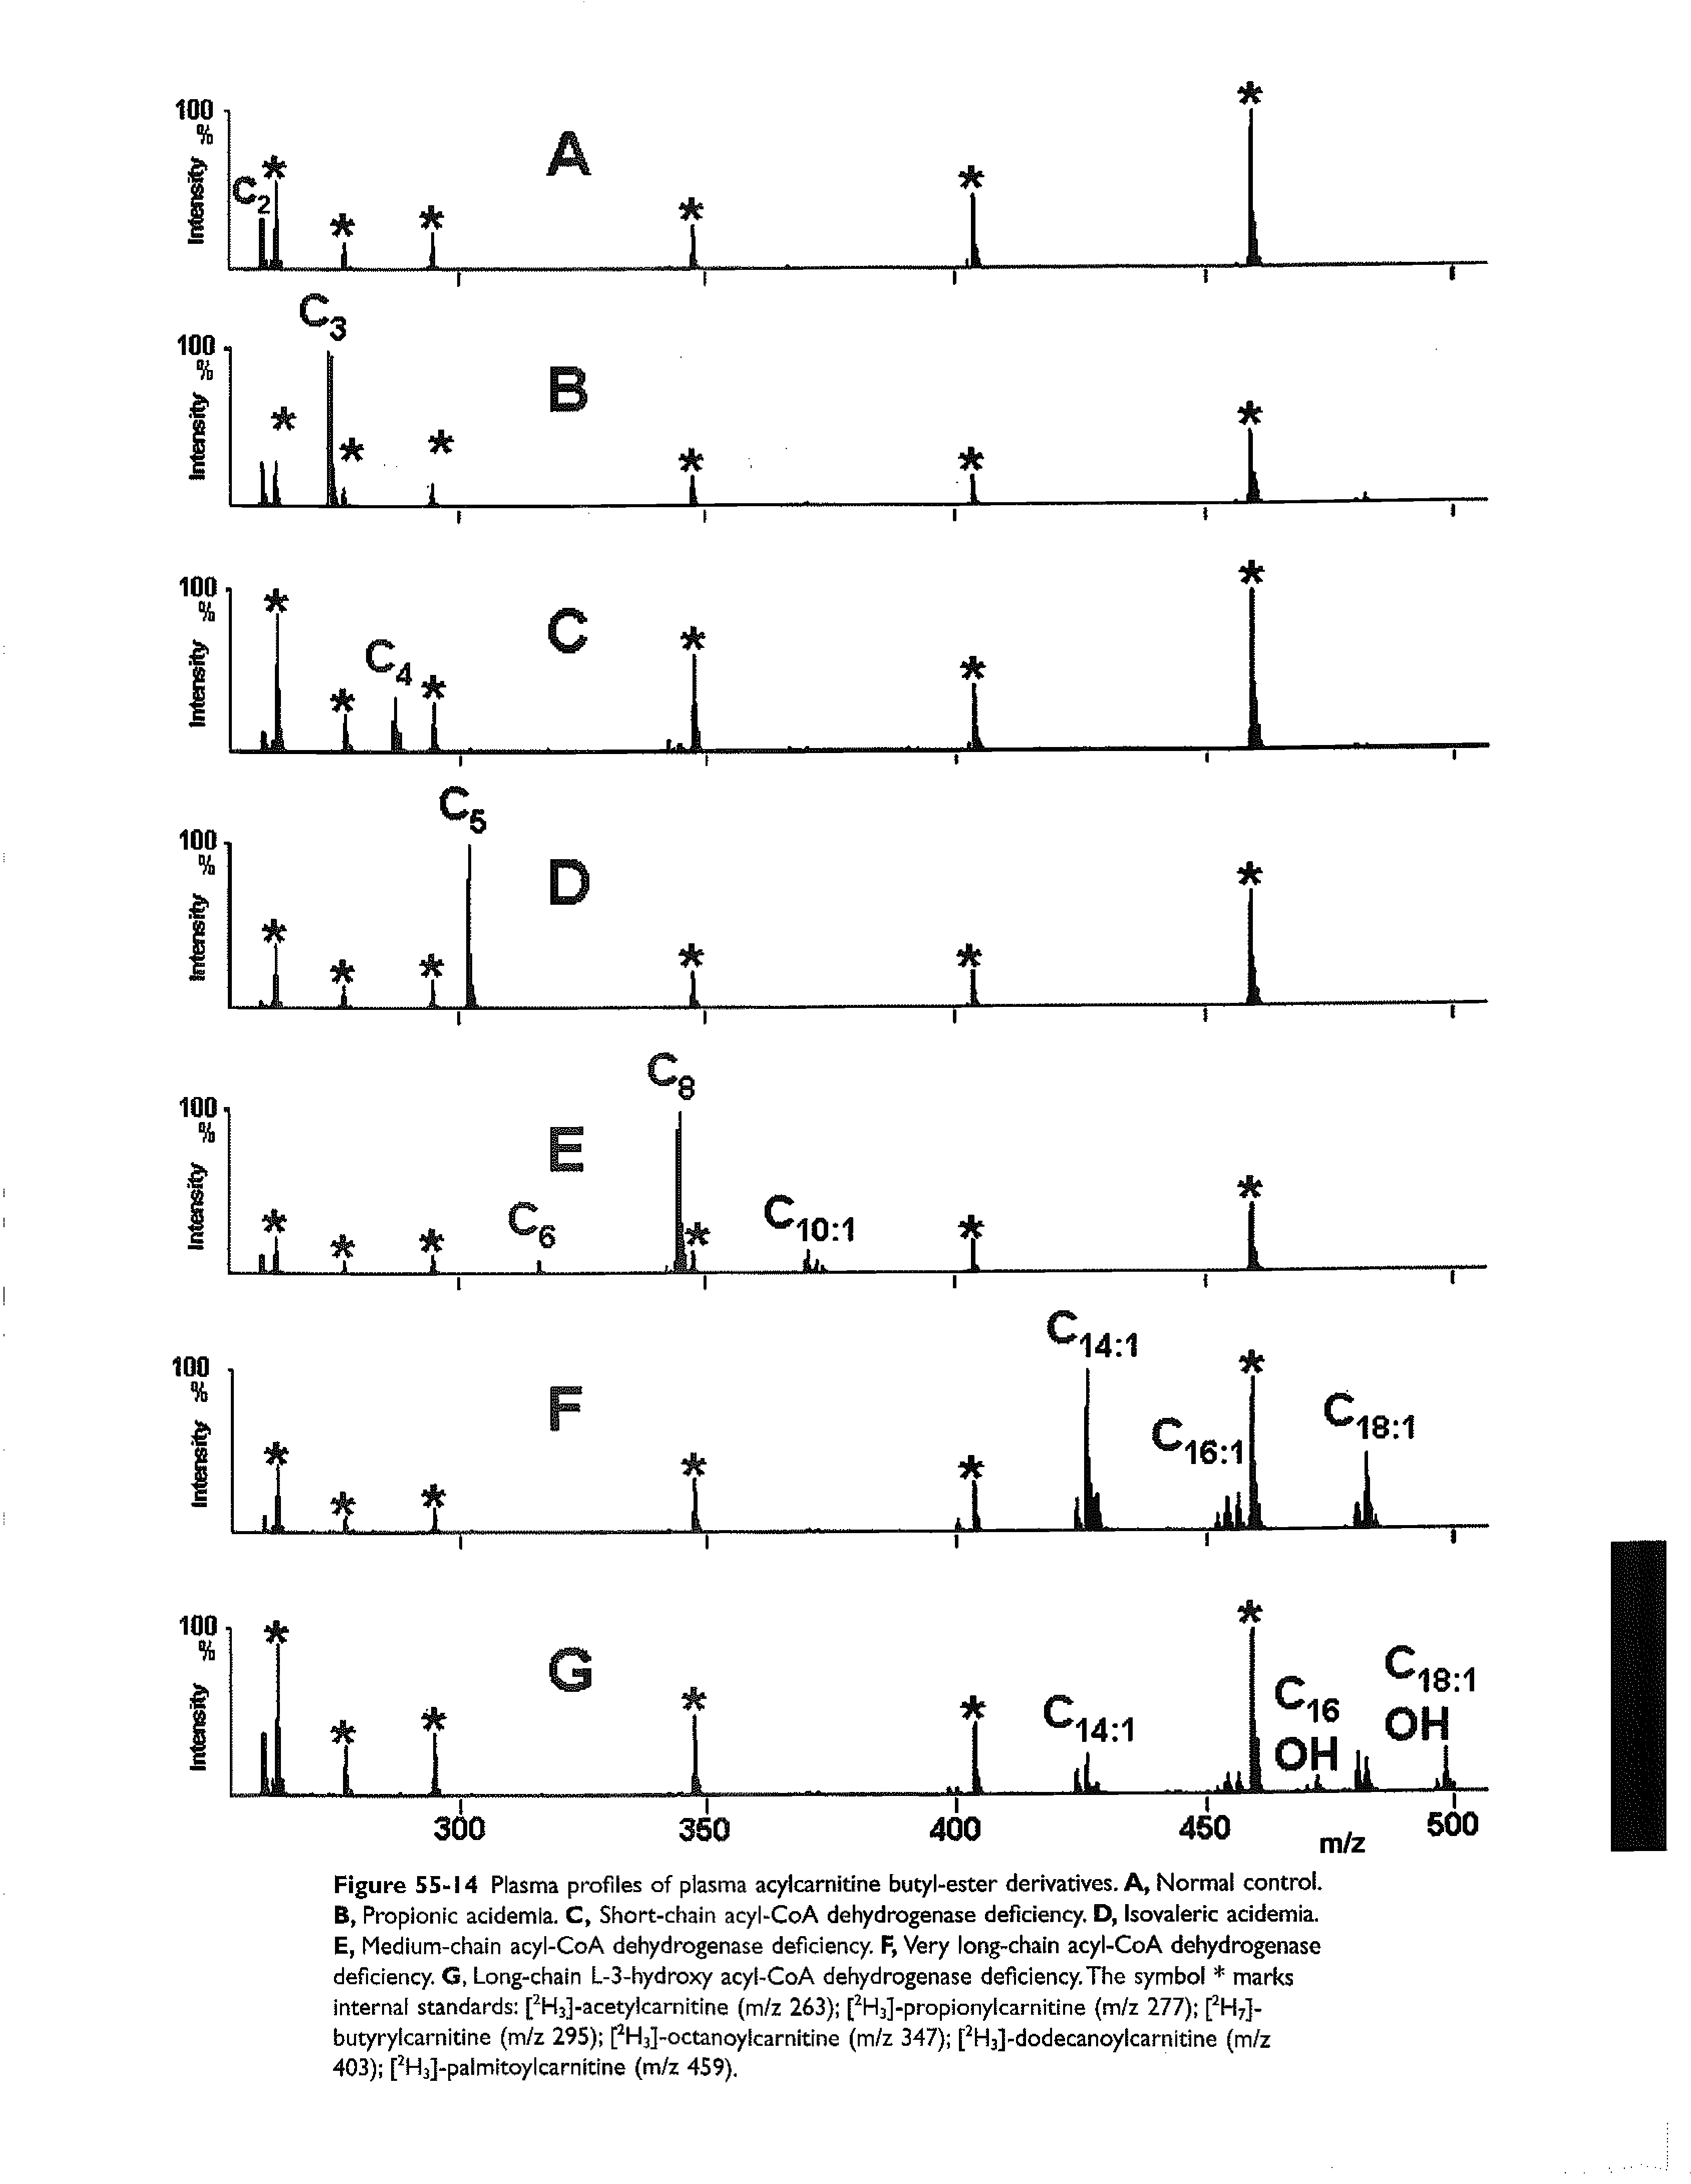 Figure 55-14 Plasma profiles of plasma acylcarnitine butyl-ester derivatives. A, Normal control. B, Propionic acidemia. C, Short-chain acyl-CoA dehydrogenase deficiency. D, Isovaleric acidemia. E, Medium-chain acyl-CoA dehydrogenase deficiency. F, Very long-chain acyl-CoA dehydrogenase deficiency. G, Long-chain L-3-hydroxy acyl-CoA dehydrogenase deficiency.The symbol marks internal standards [ Hjj-acetylcarnitine (m/z 263) [ HaJ-propionylcarnitine (m/z 277) fH ]-butyrylcarnitlne (m/z 295) pHal-octanoylcarnitine (m/z 347) [ Haj-dodecanoylcarnltine (m/z 403) [ Haj-palmitoy I carnitine (m/z 459).